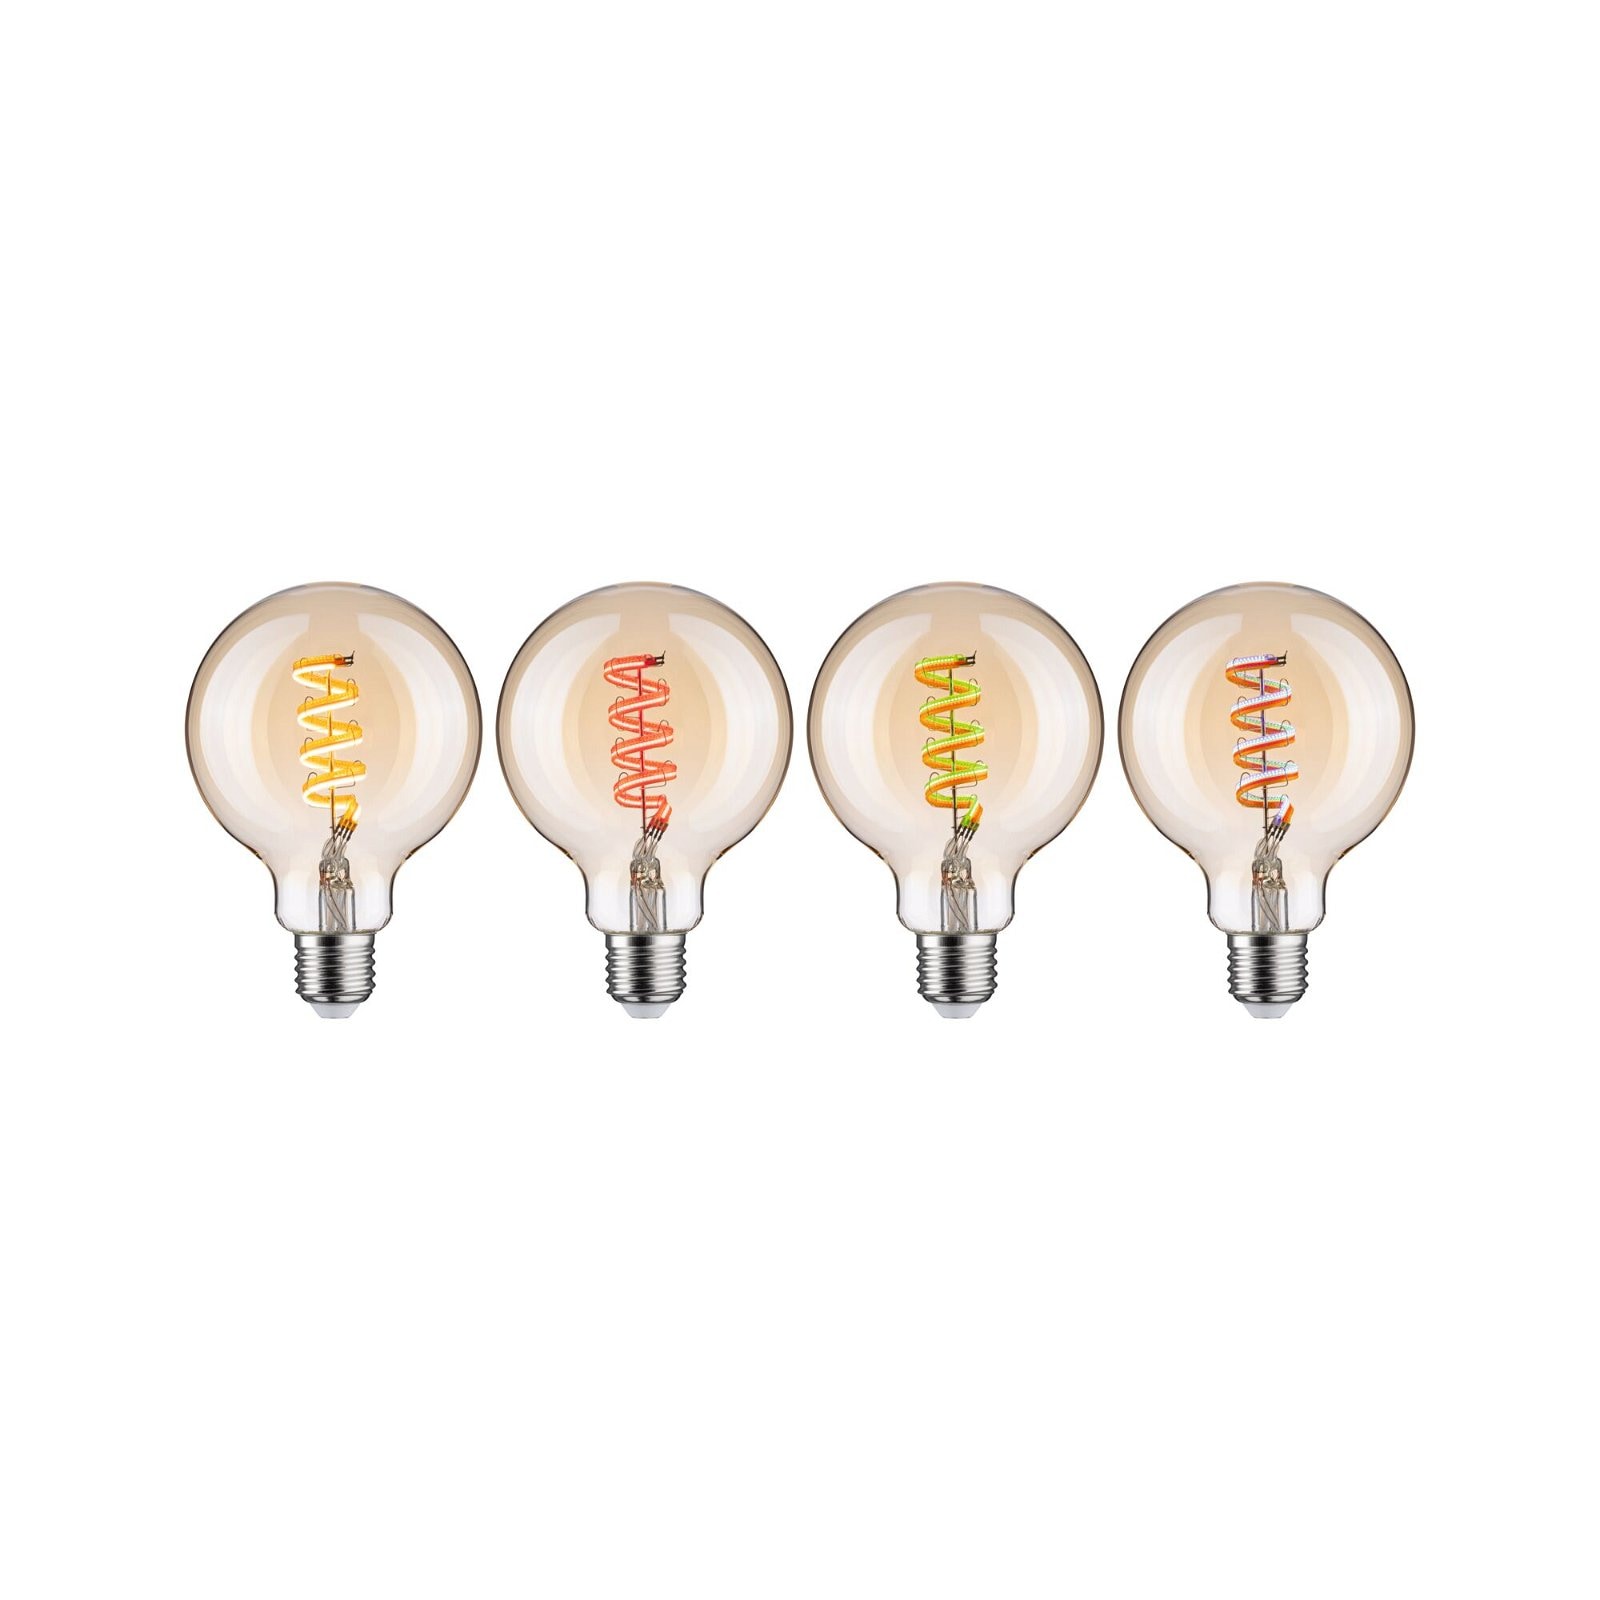 | BAUR LED-Leuchtmittel 2200K-6500K Tageslichtweiß gold G95 Filament 470lm kaufen Paulmann »Smart 230V«, 1 St., online